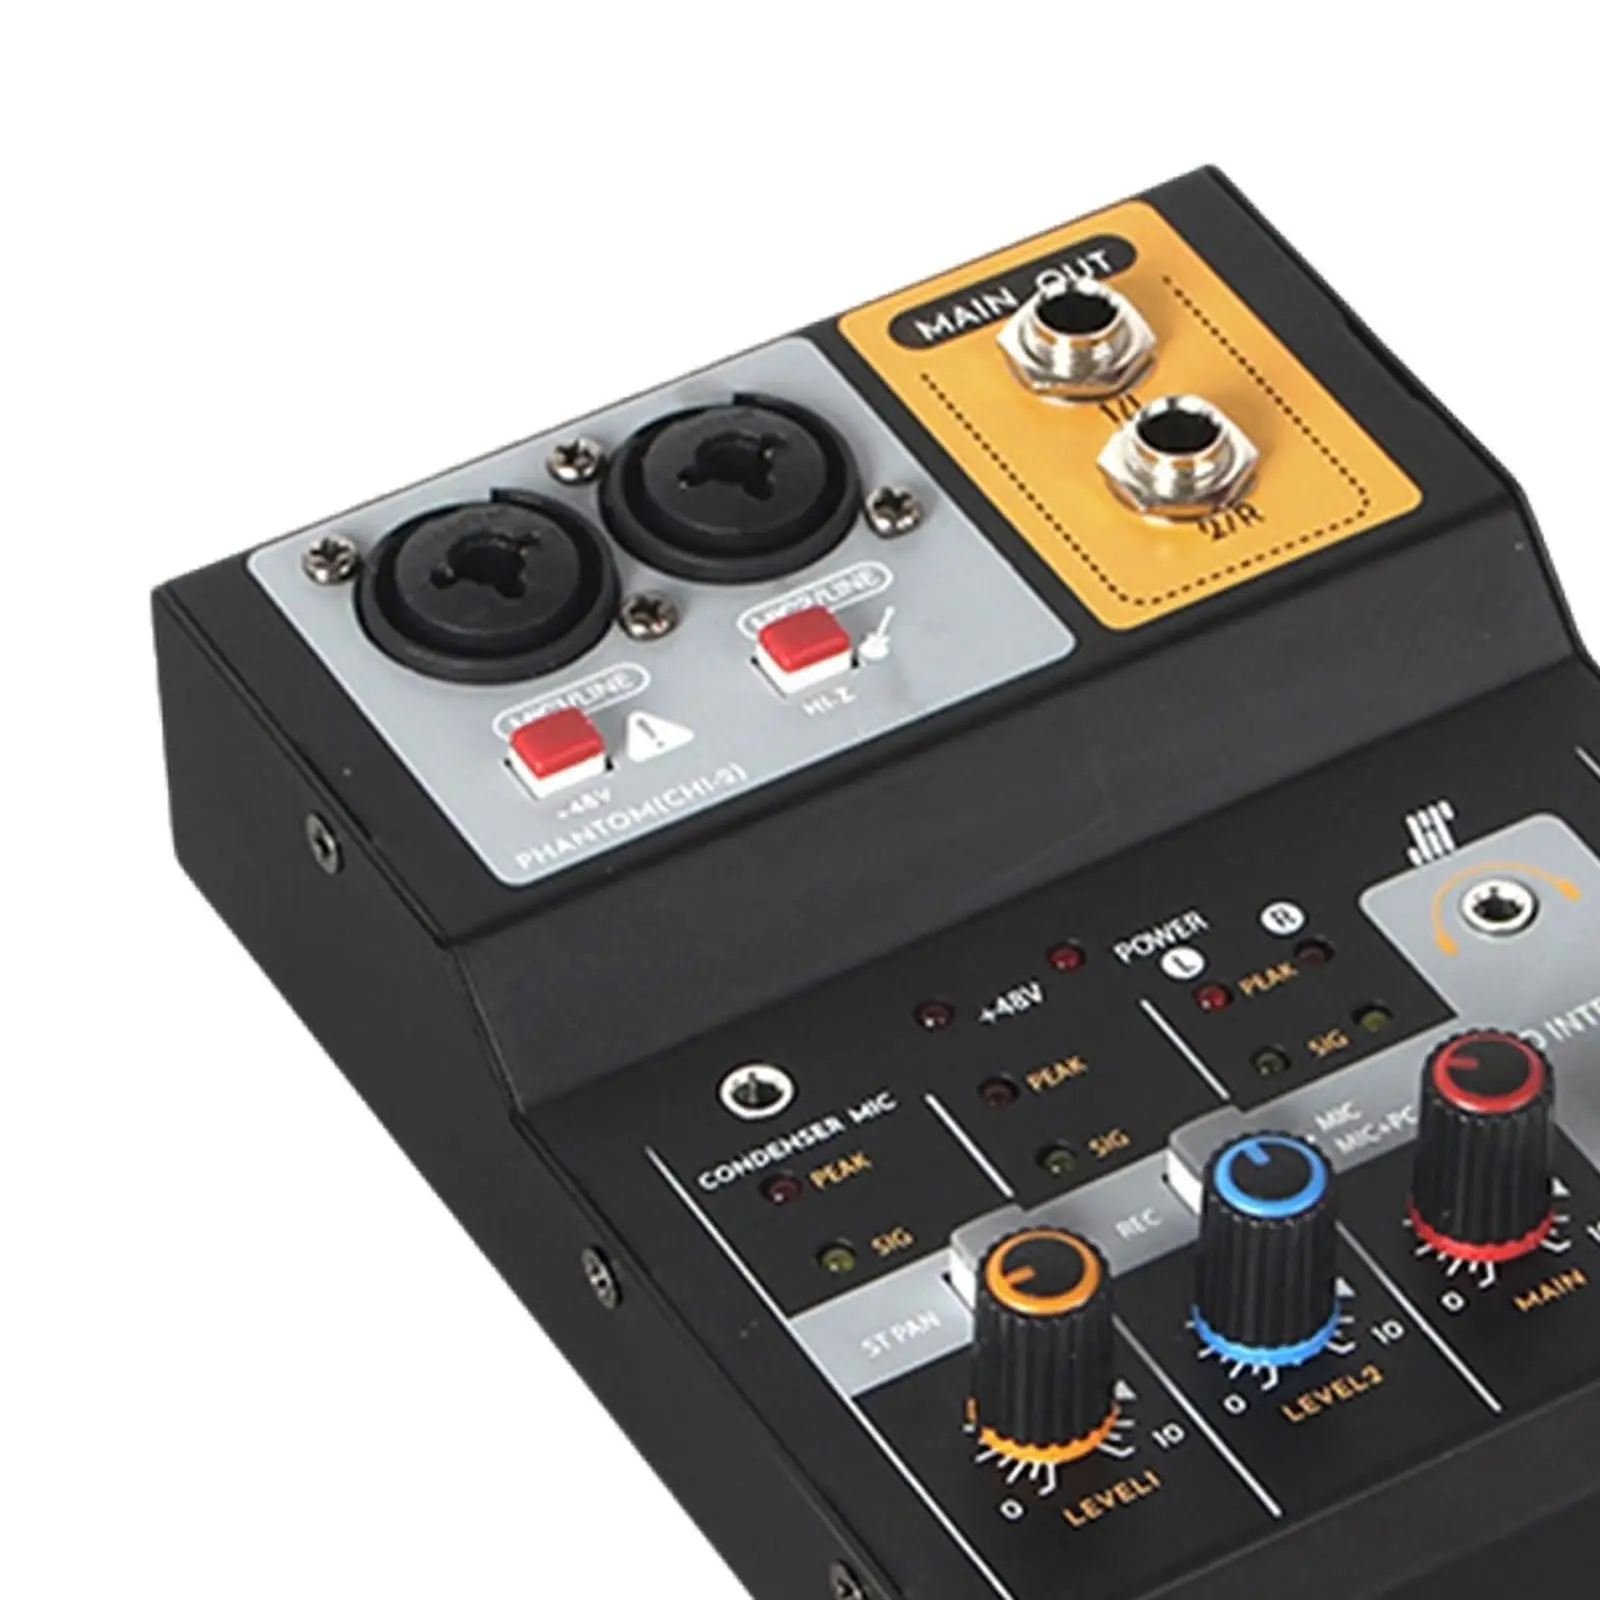 Audio Mixer Controller Amplifier Professional Digital Mixer for Studio Show Live Broadcast Podcasting Party Recording KTV